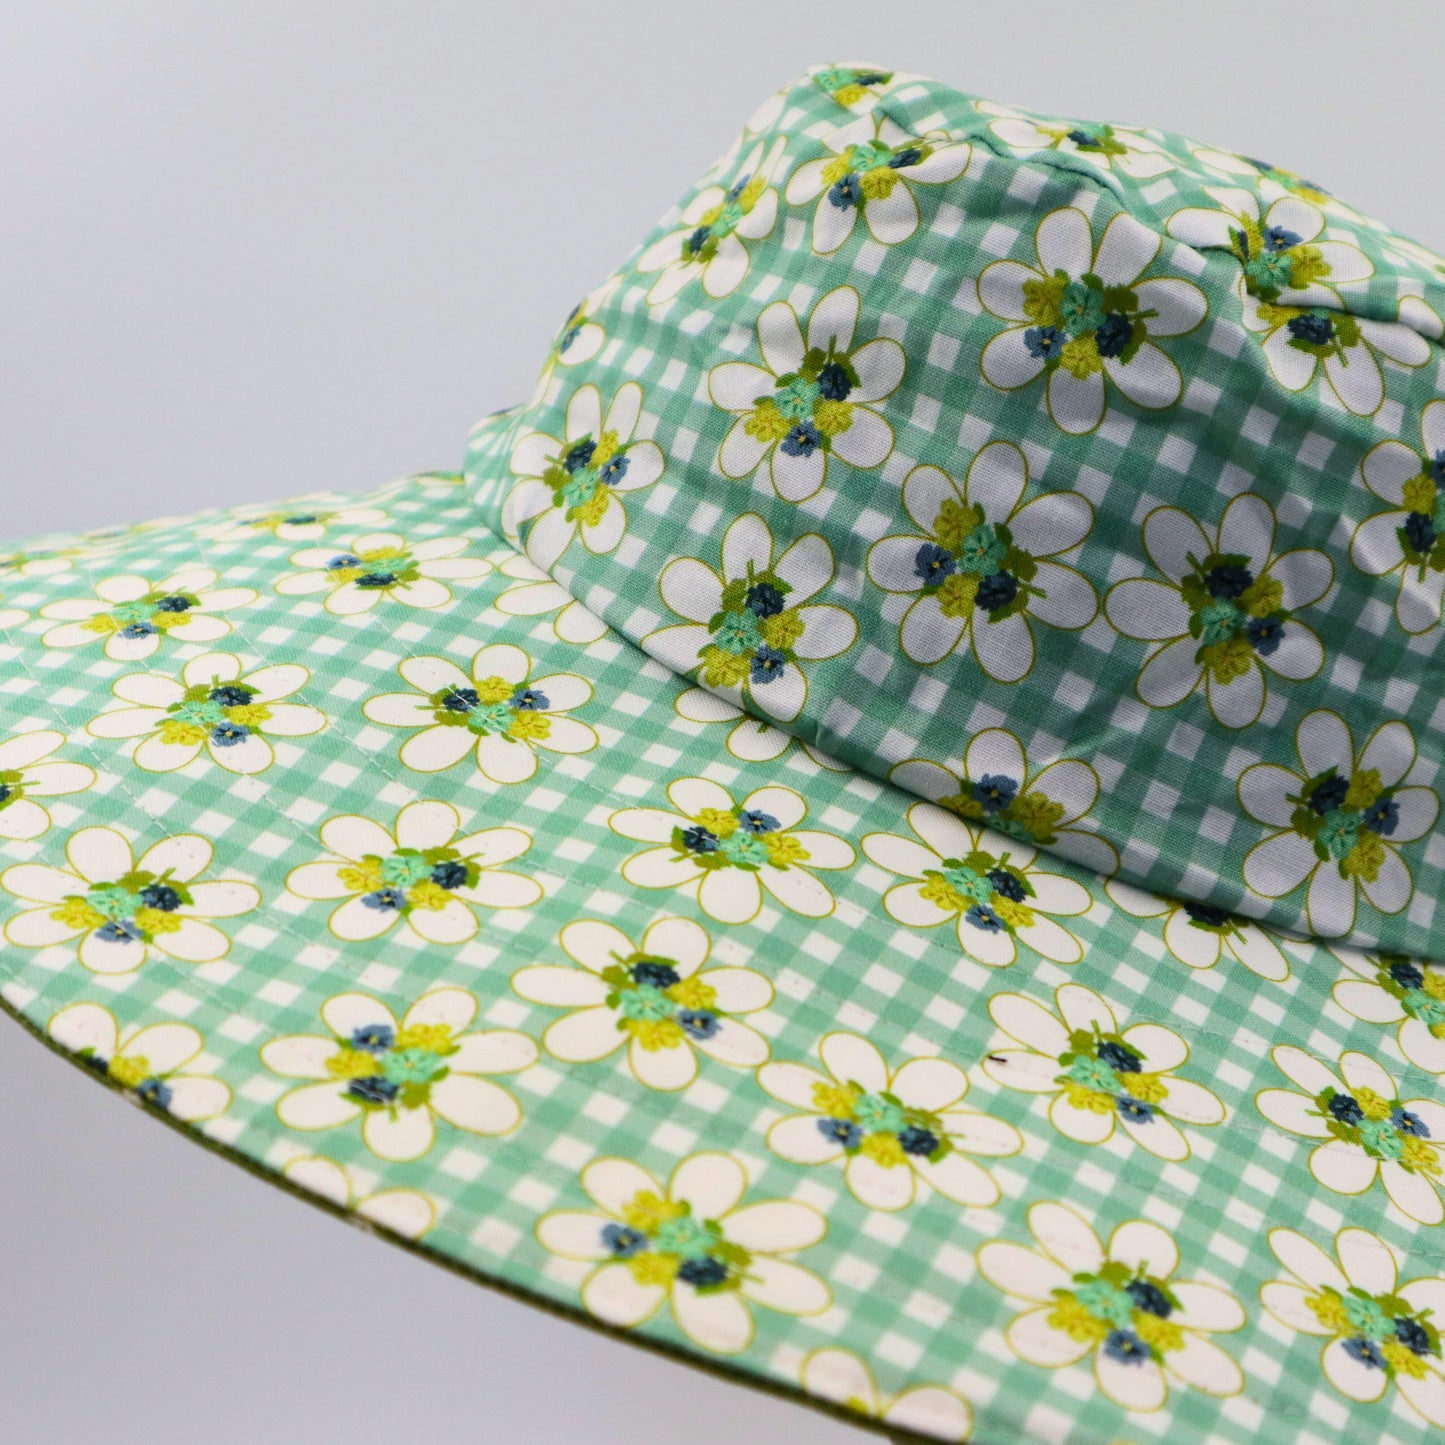 Wide Brim Reversible Sun Hat, Ladies / Girls sizes avail